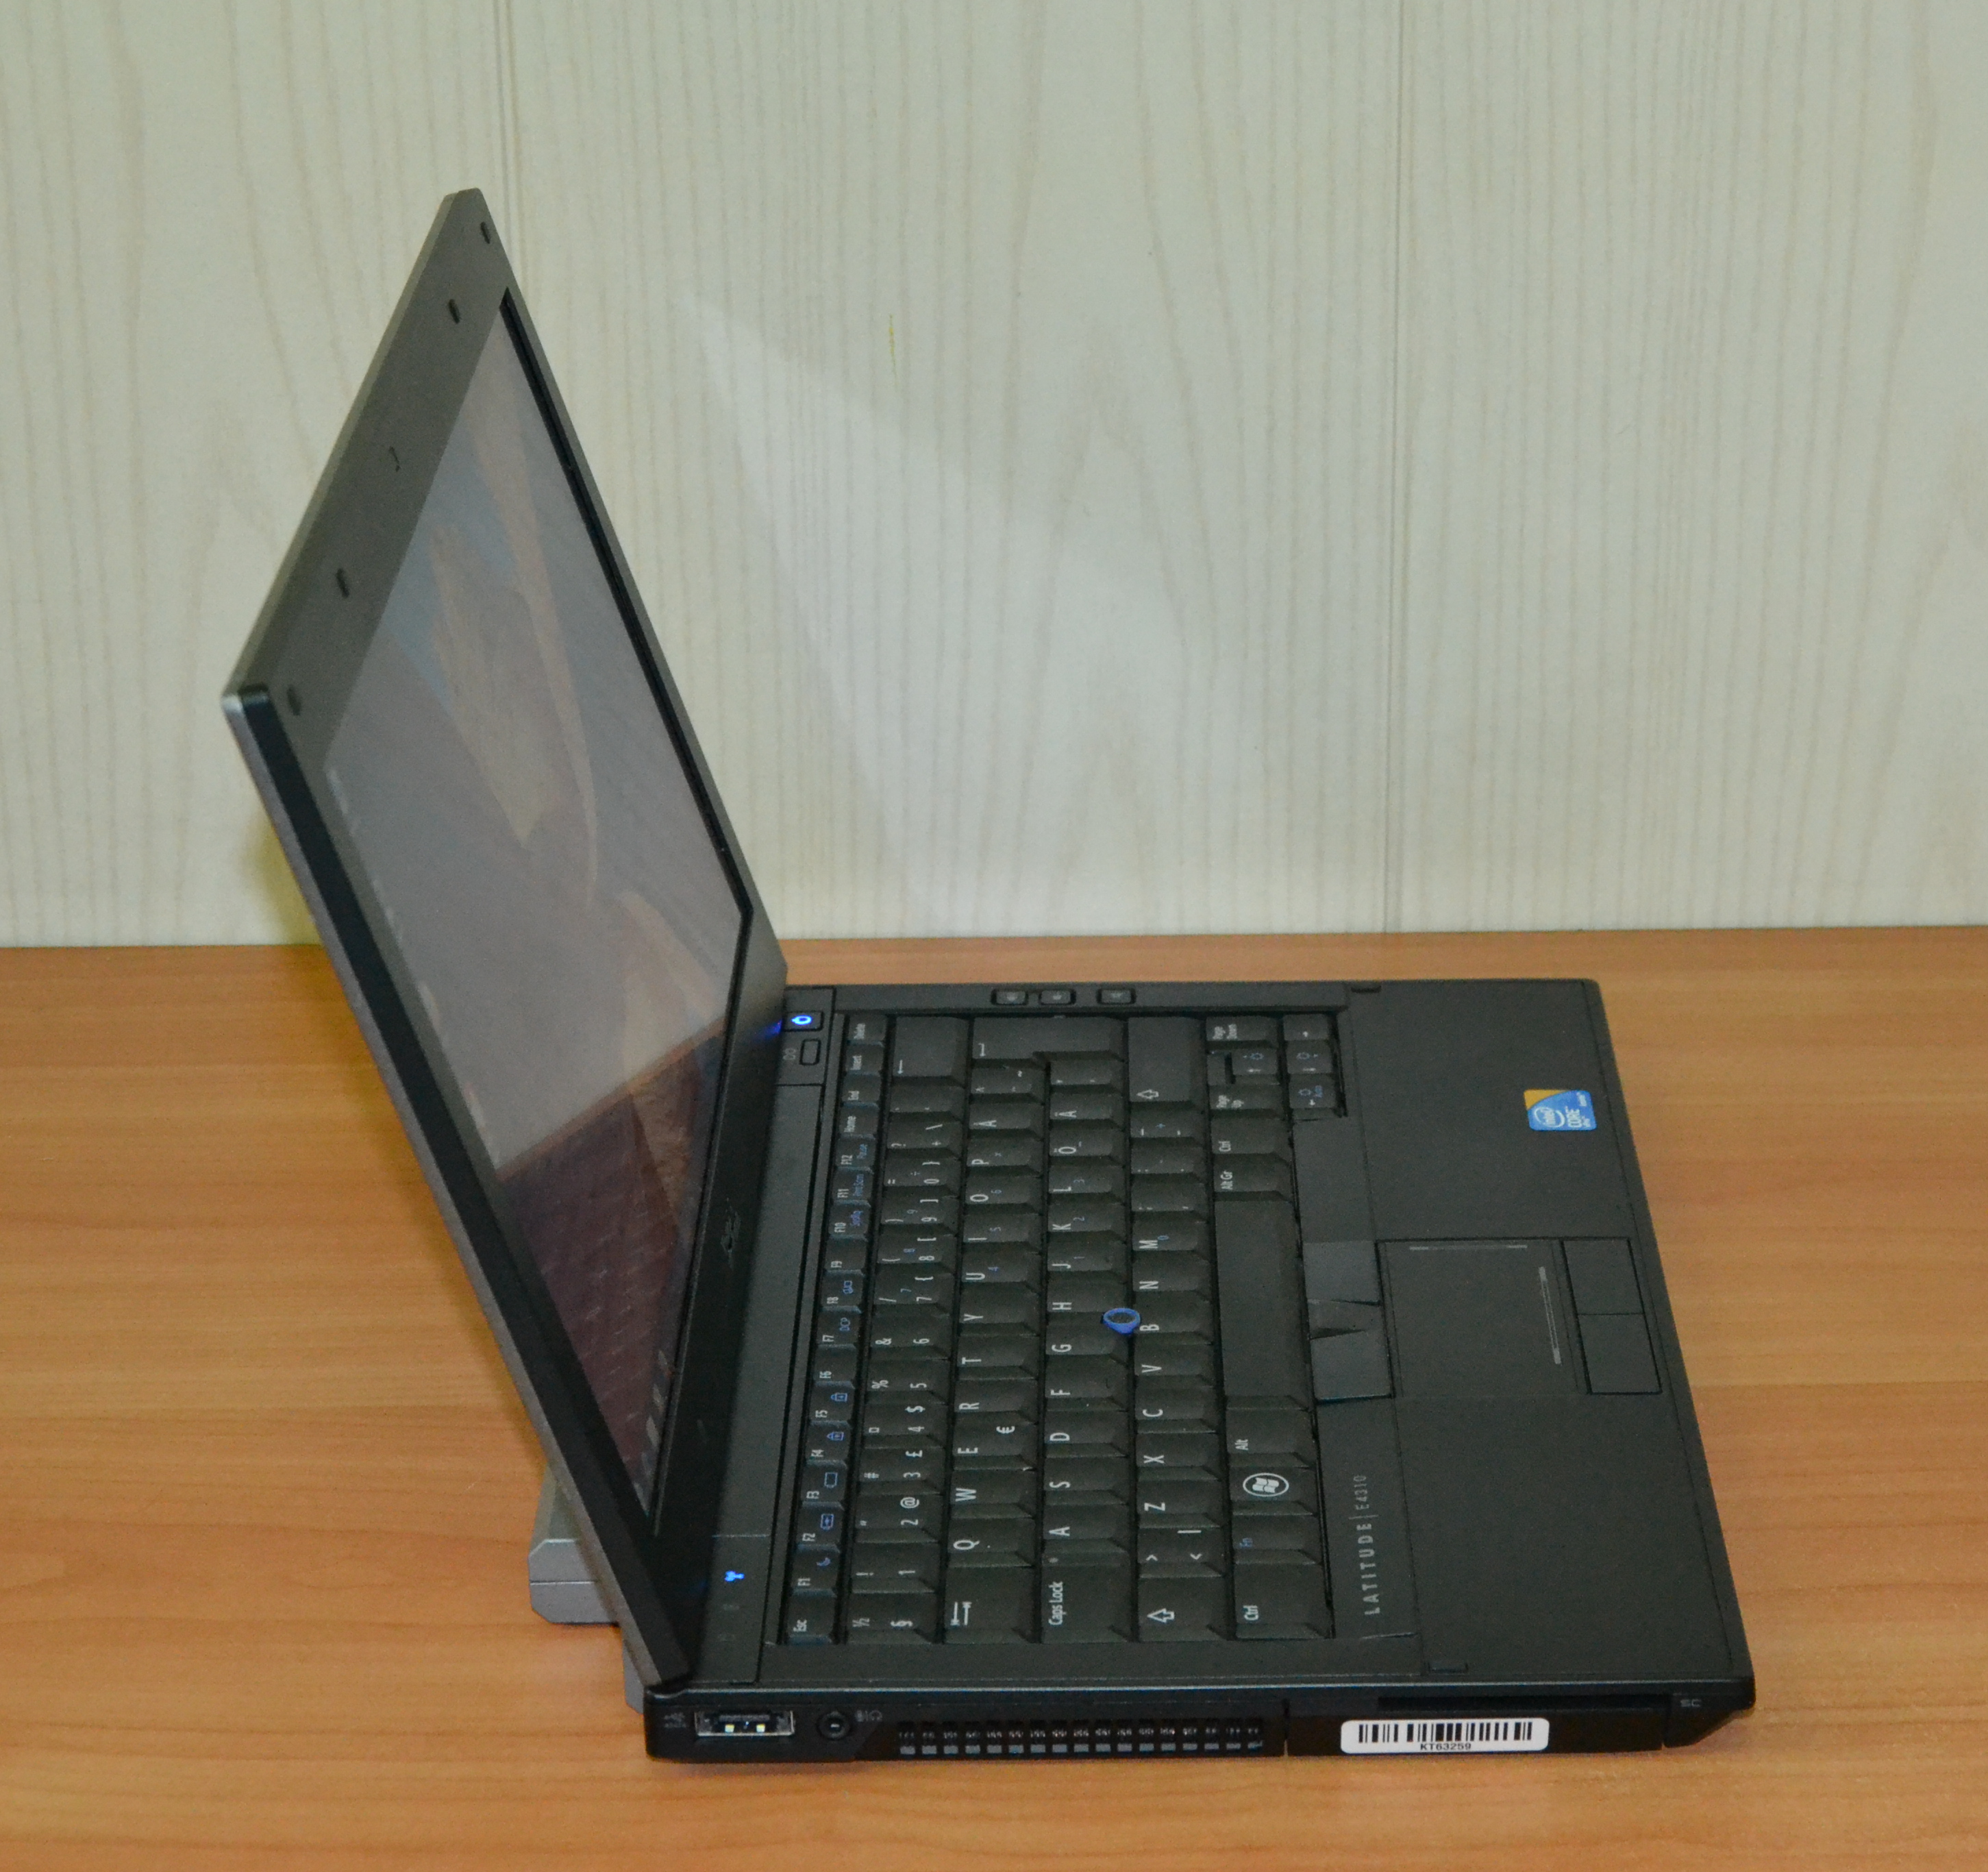 Dell E4310 — купить б/у ноутбук за 9,500 руб. с гарантией 6 месяцев